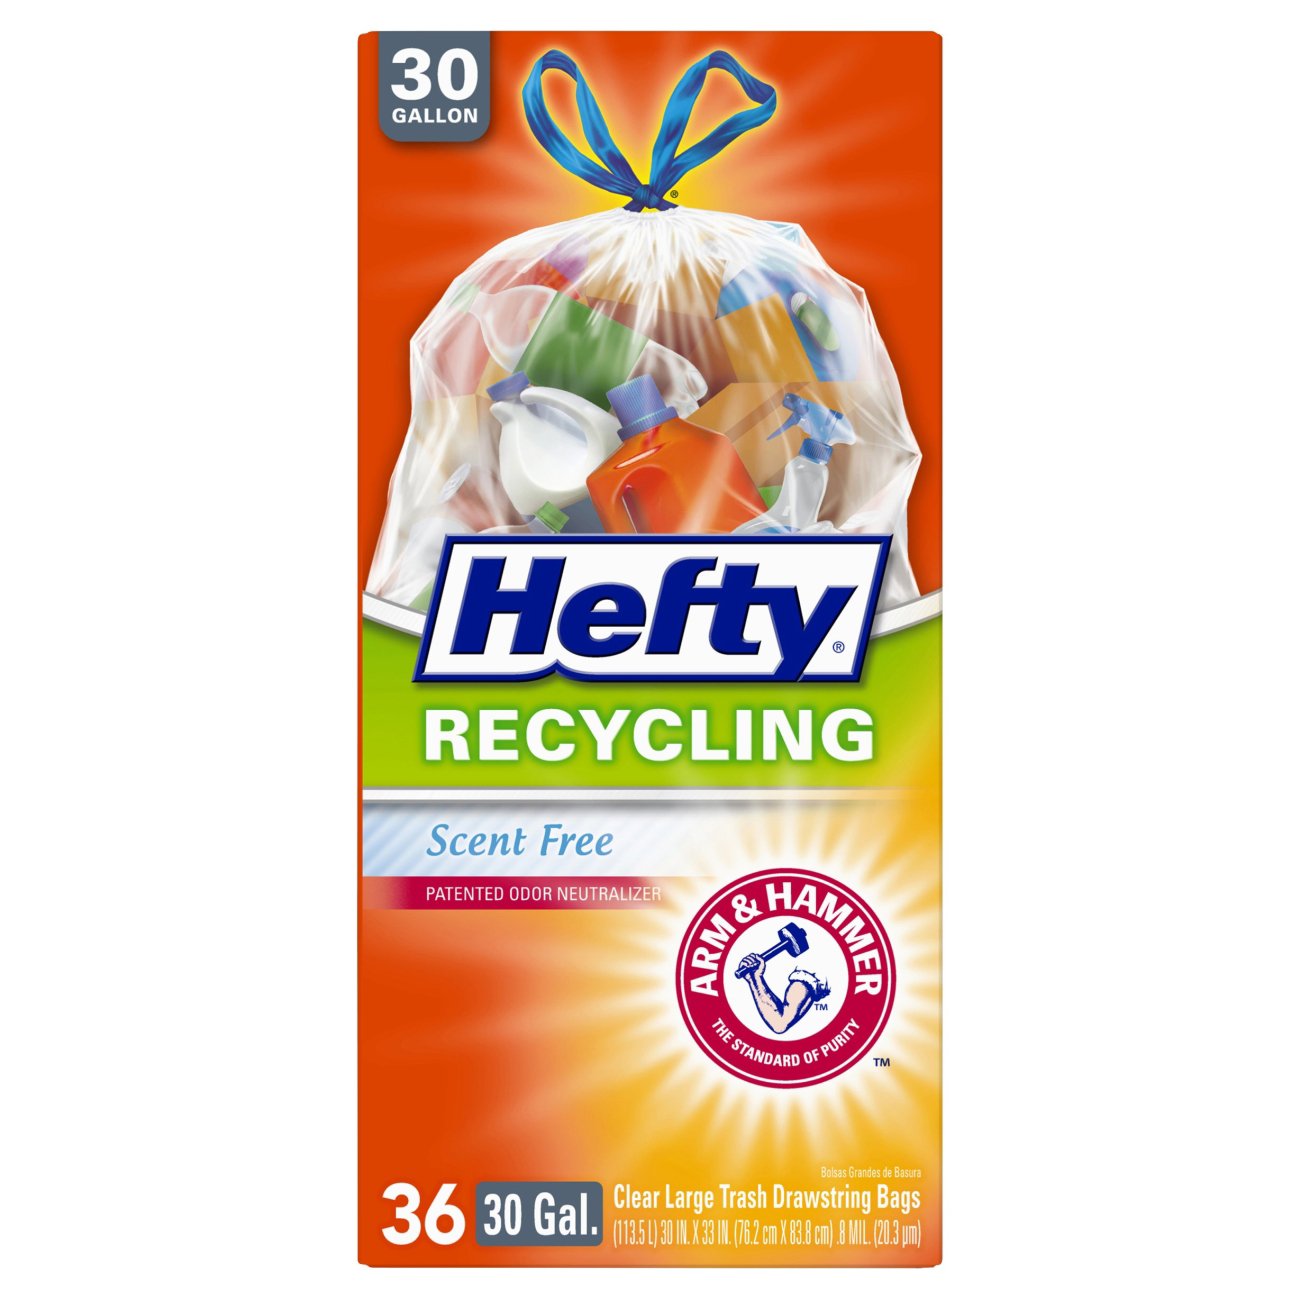 Hefty Easy Flaps Large Multipurpose 30 Gallon Flap Tie Trash Bags - Shop Trash  Bags at H-E-B